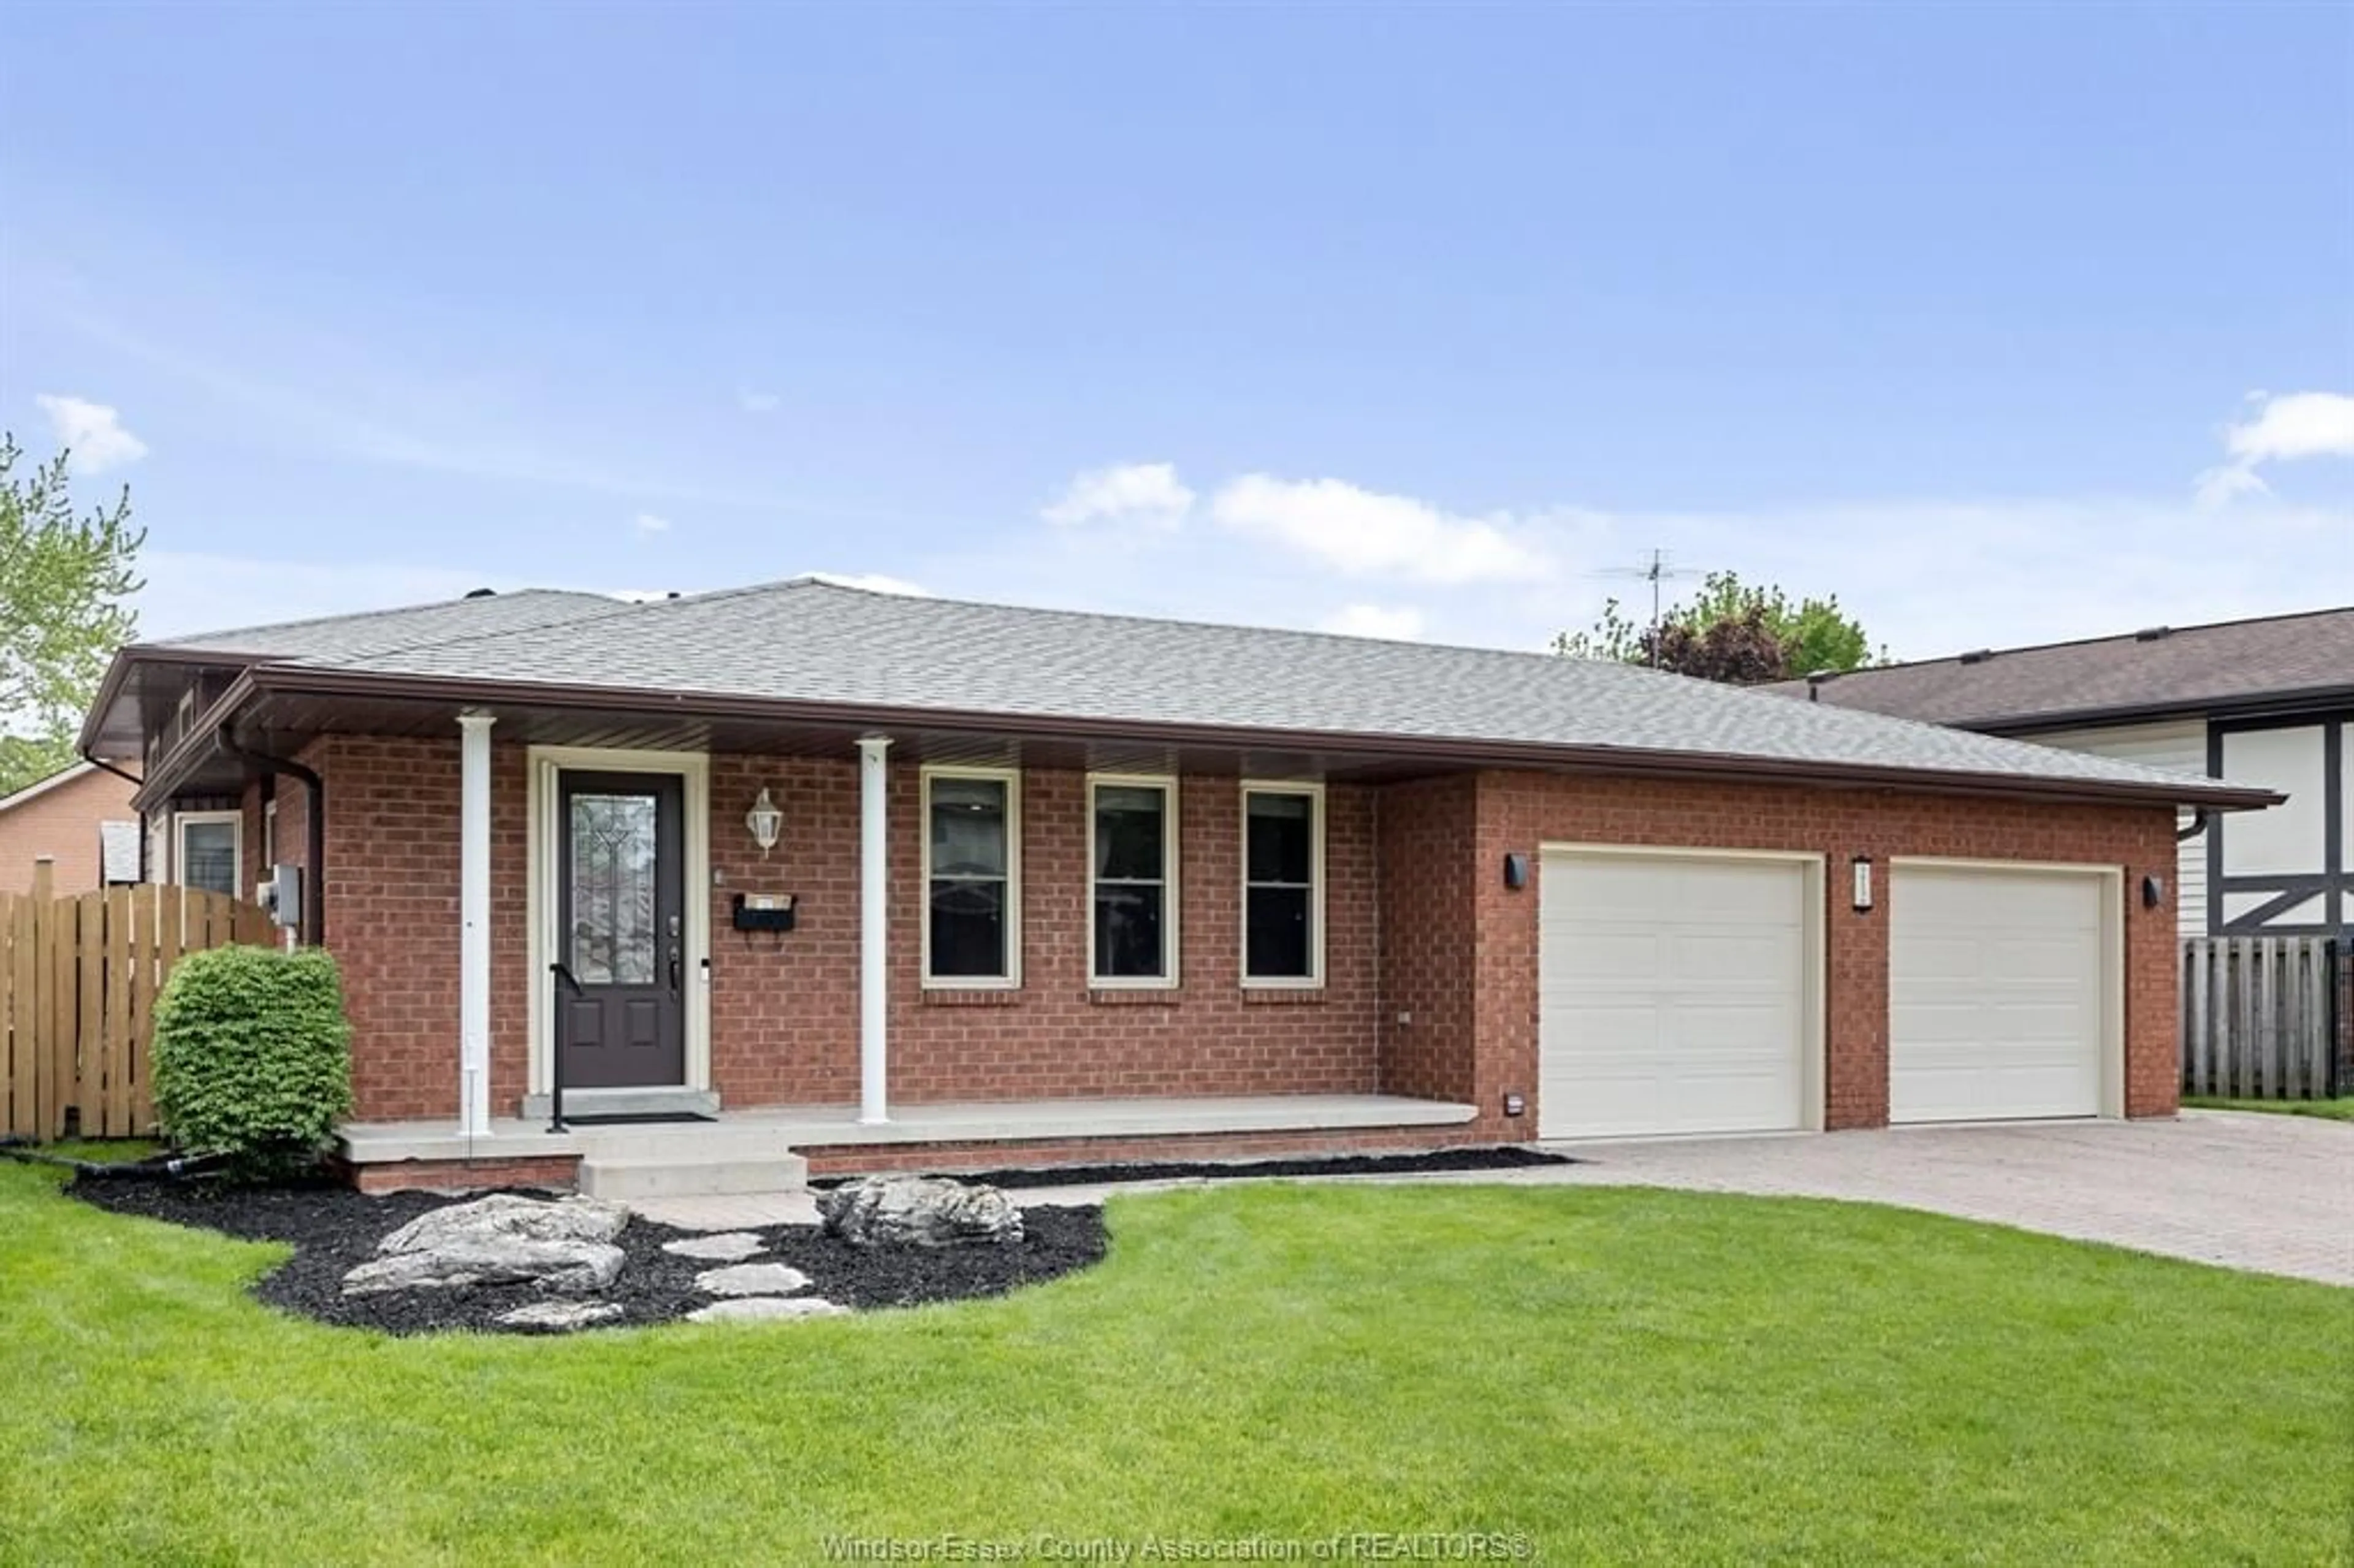 Home with brick exterior material for 212 WEDGEWOOD Lane, Tecumseh Ontario N8N 4J5